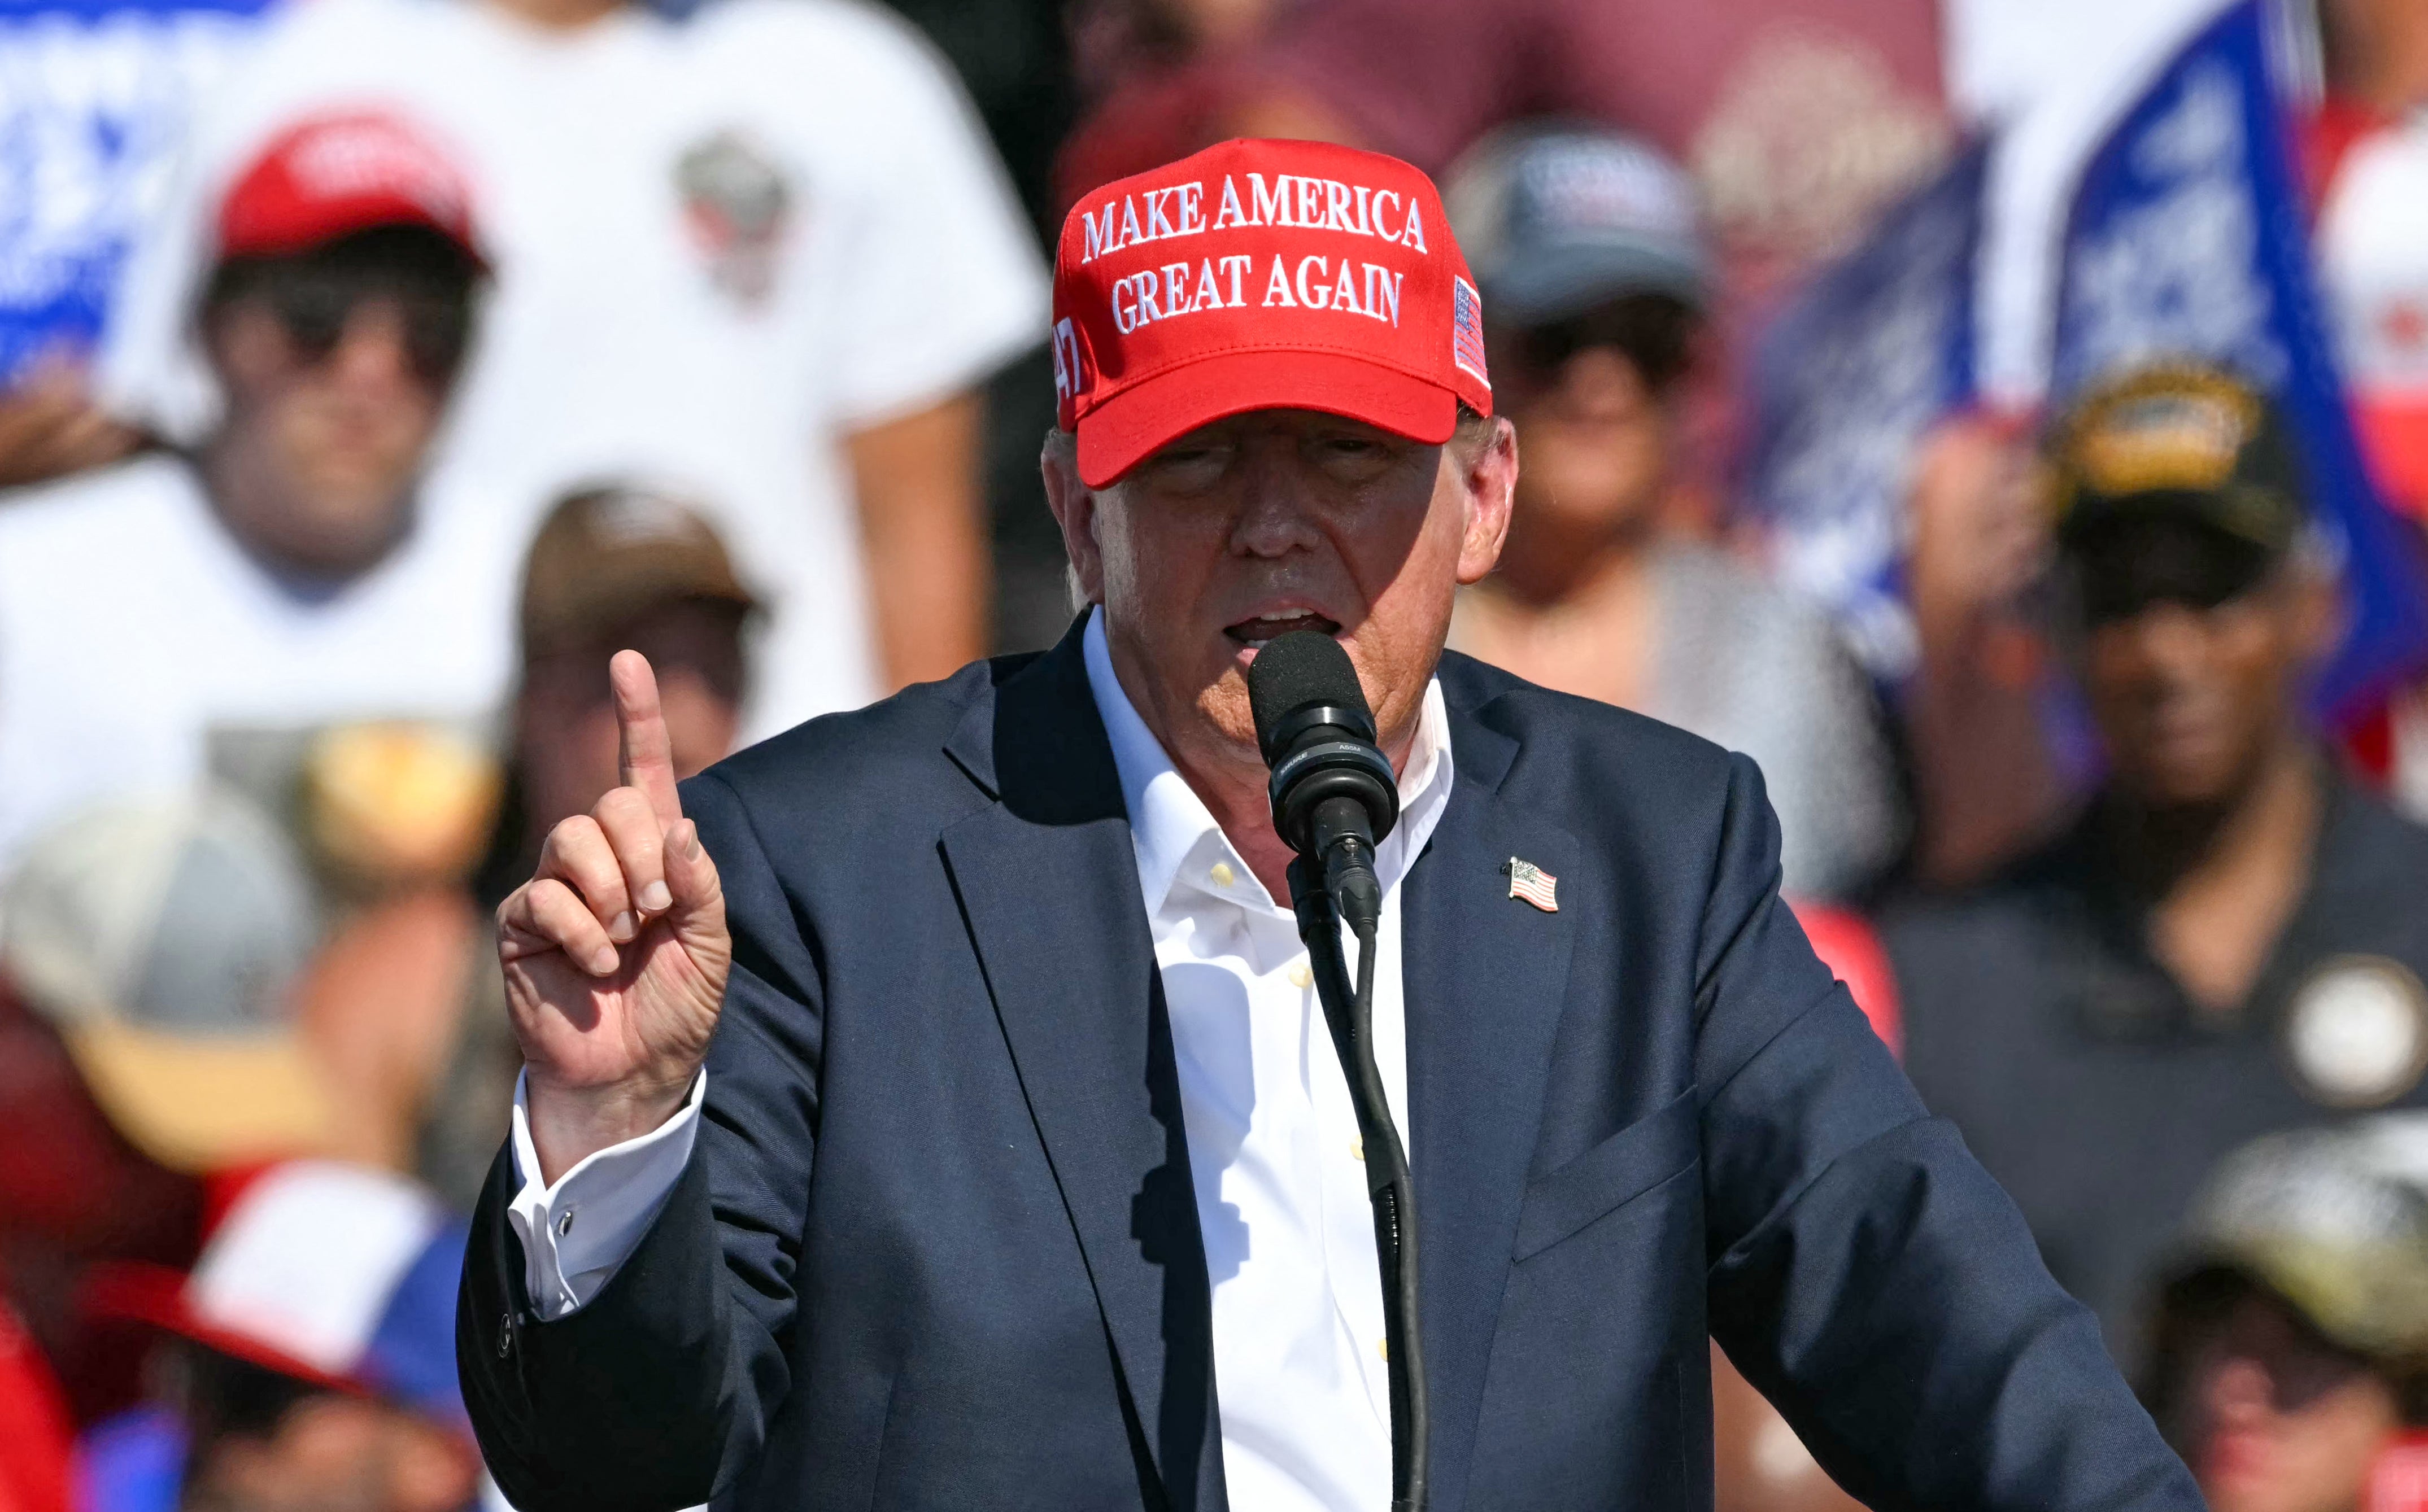 Donald Trump speaks to supporters in Virginia on June 28.